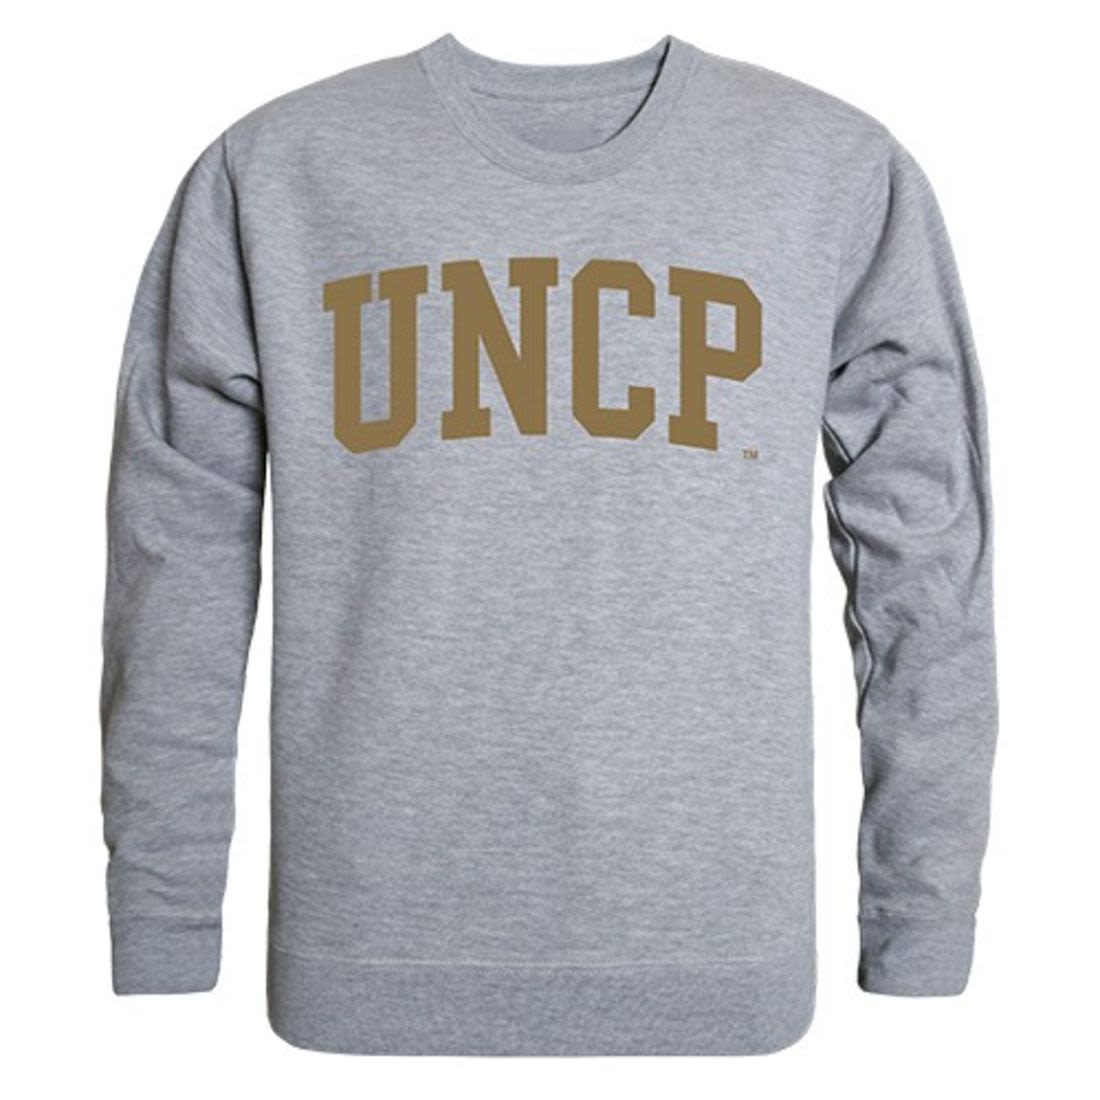 UNCP University of North Carolina at Pembroke Game Day Crewneck Pullover Sweatshirt Sweater Heather Grey-Campus-Wardrobe